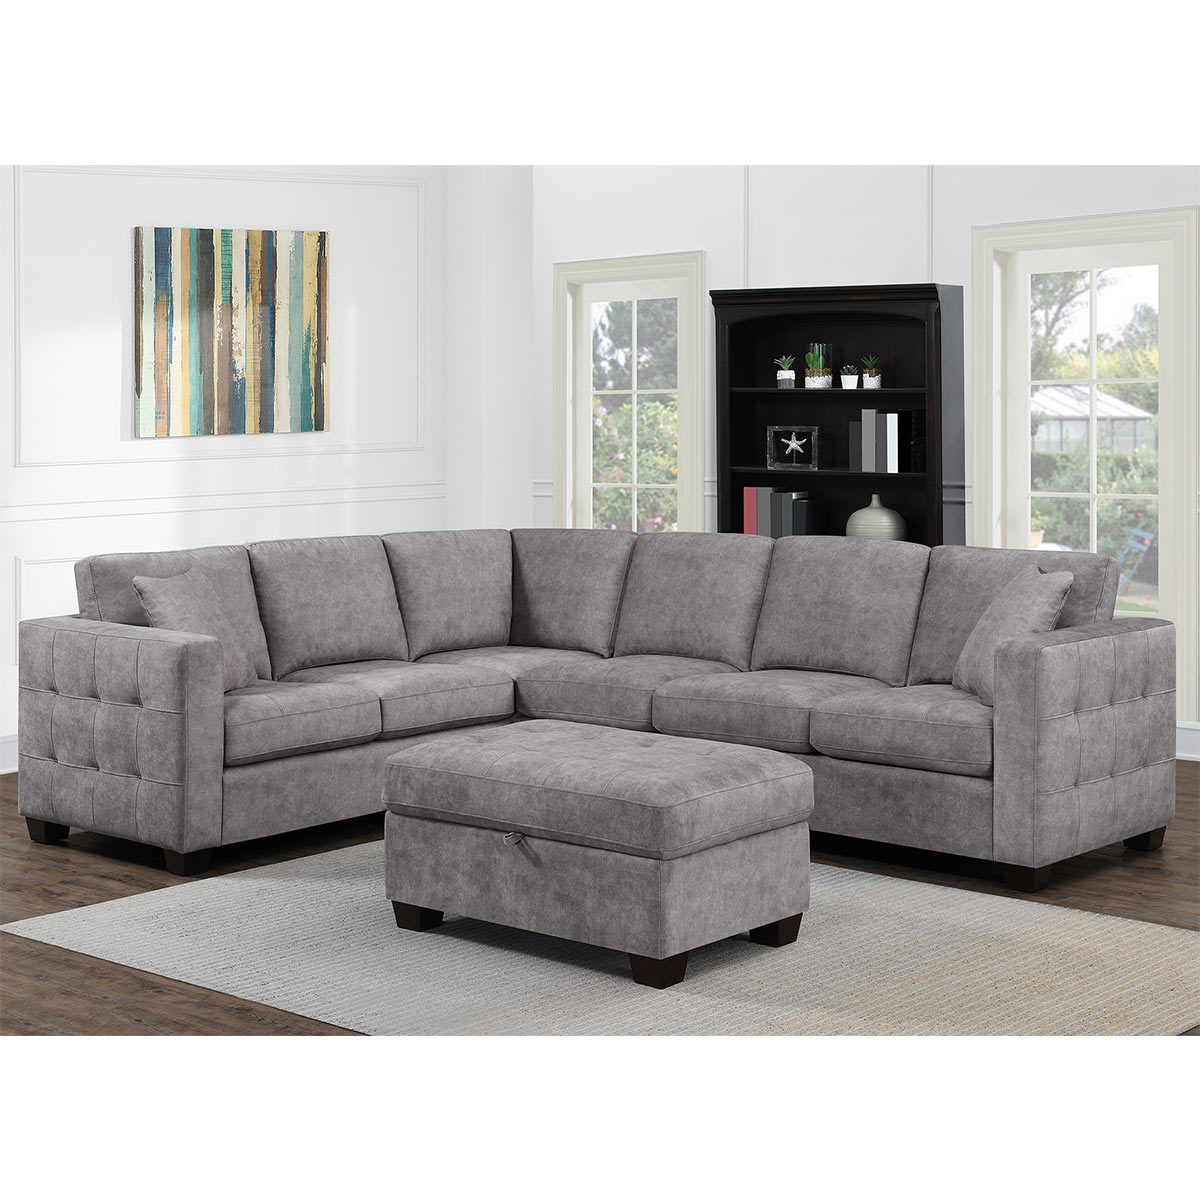 Lifestyle image of corner sofa with storage ottoman